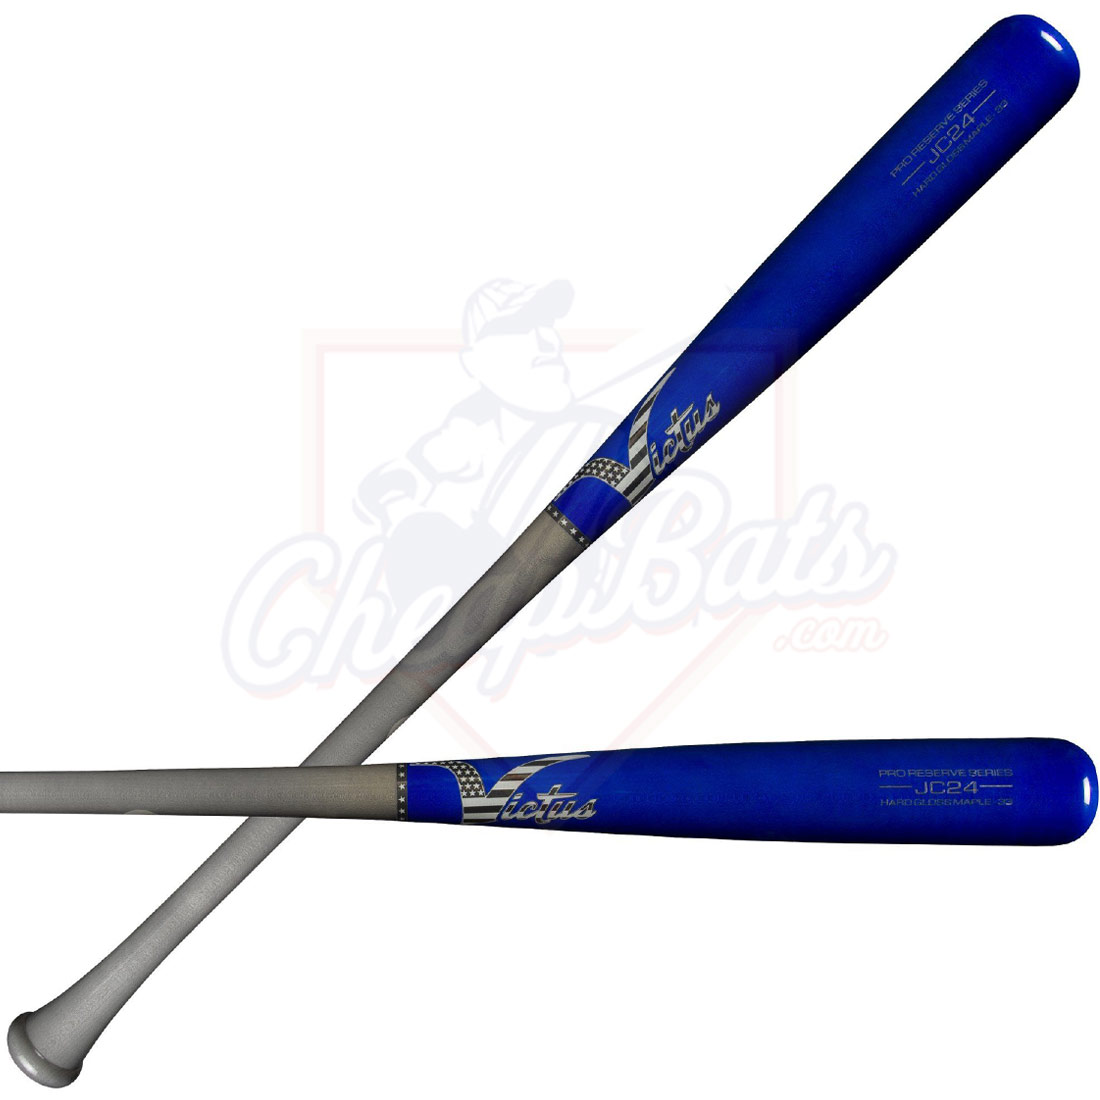 Victus JC24 Pro Reserve Maple Wood Baseball Bat VRWMJC24-GY/BL